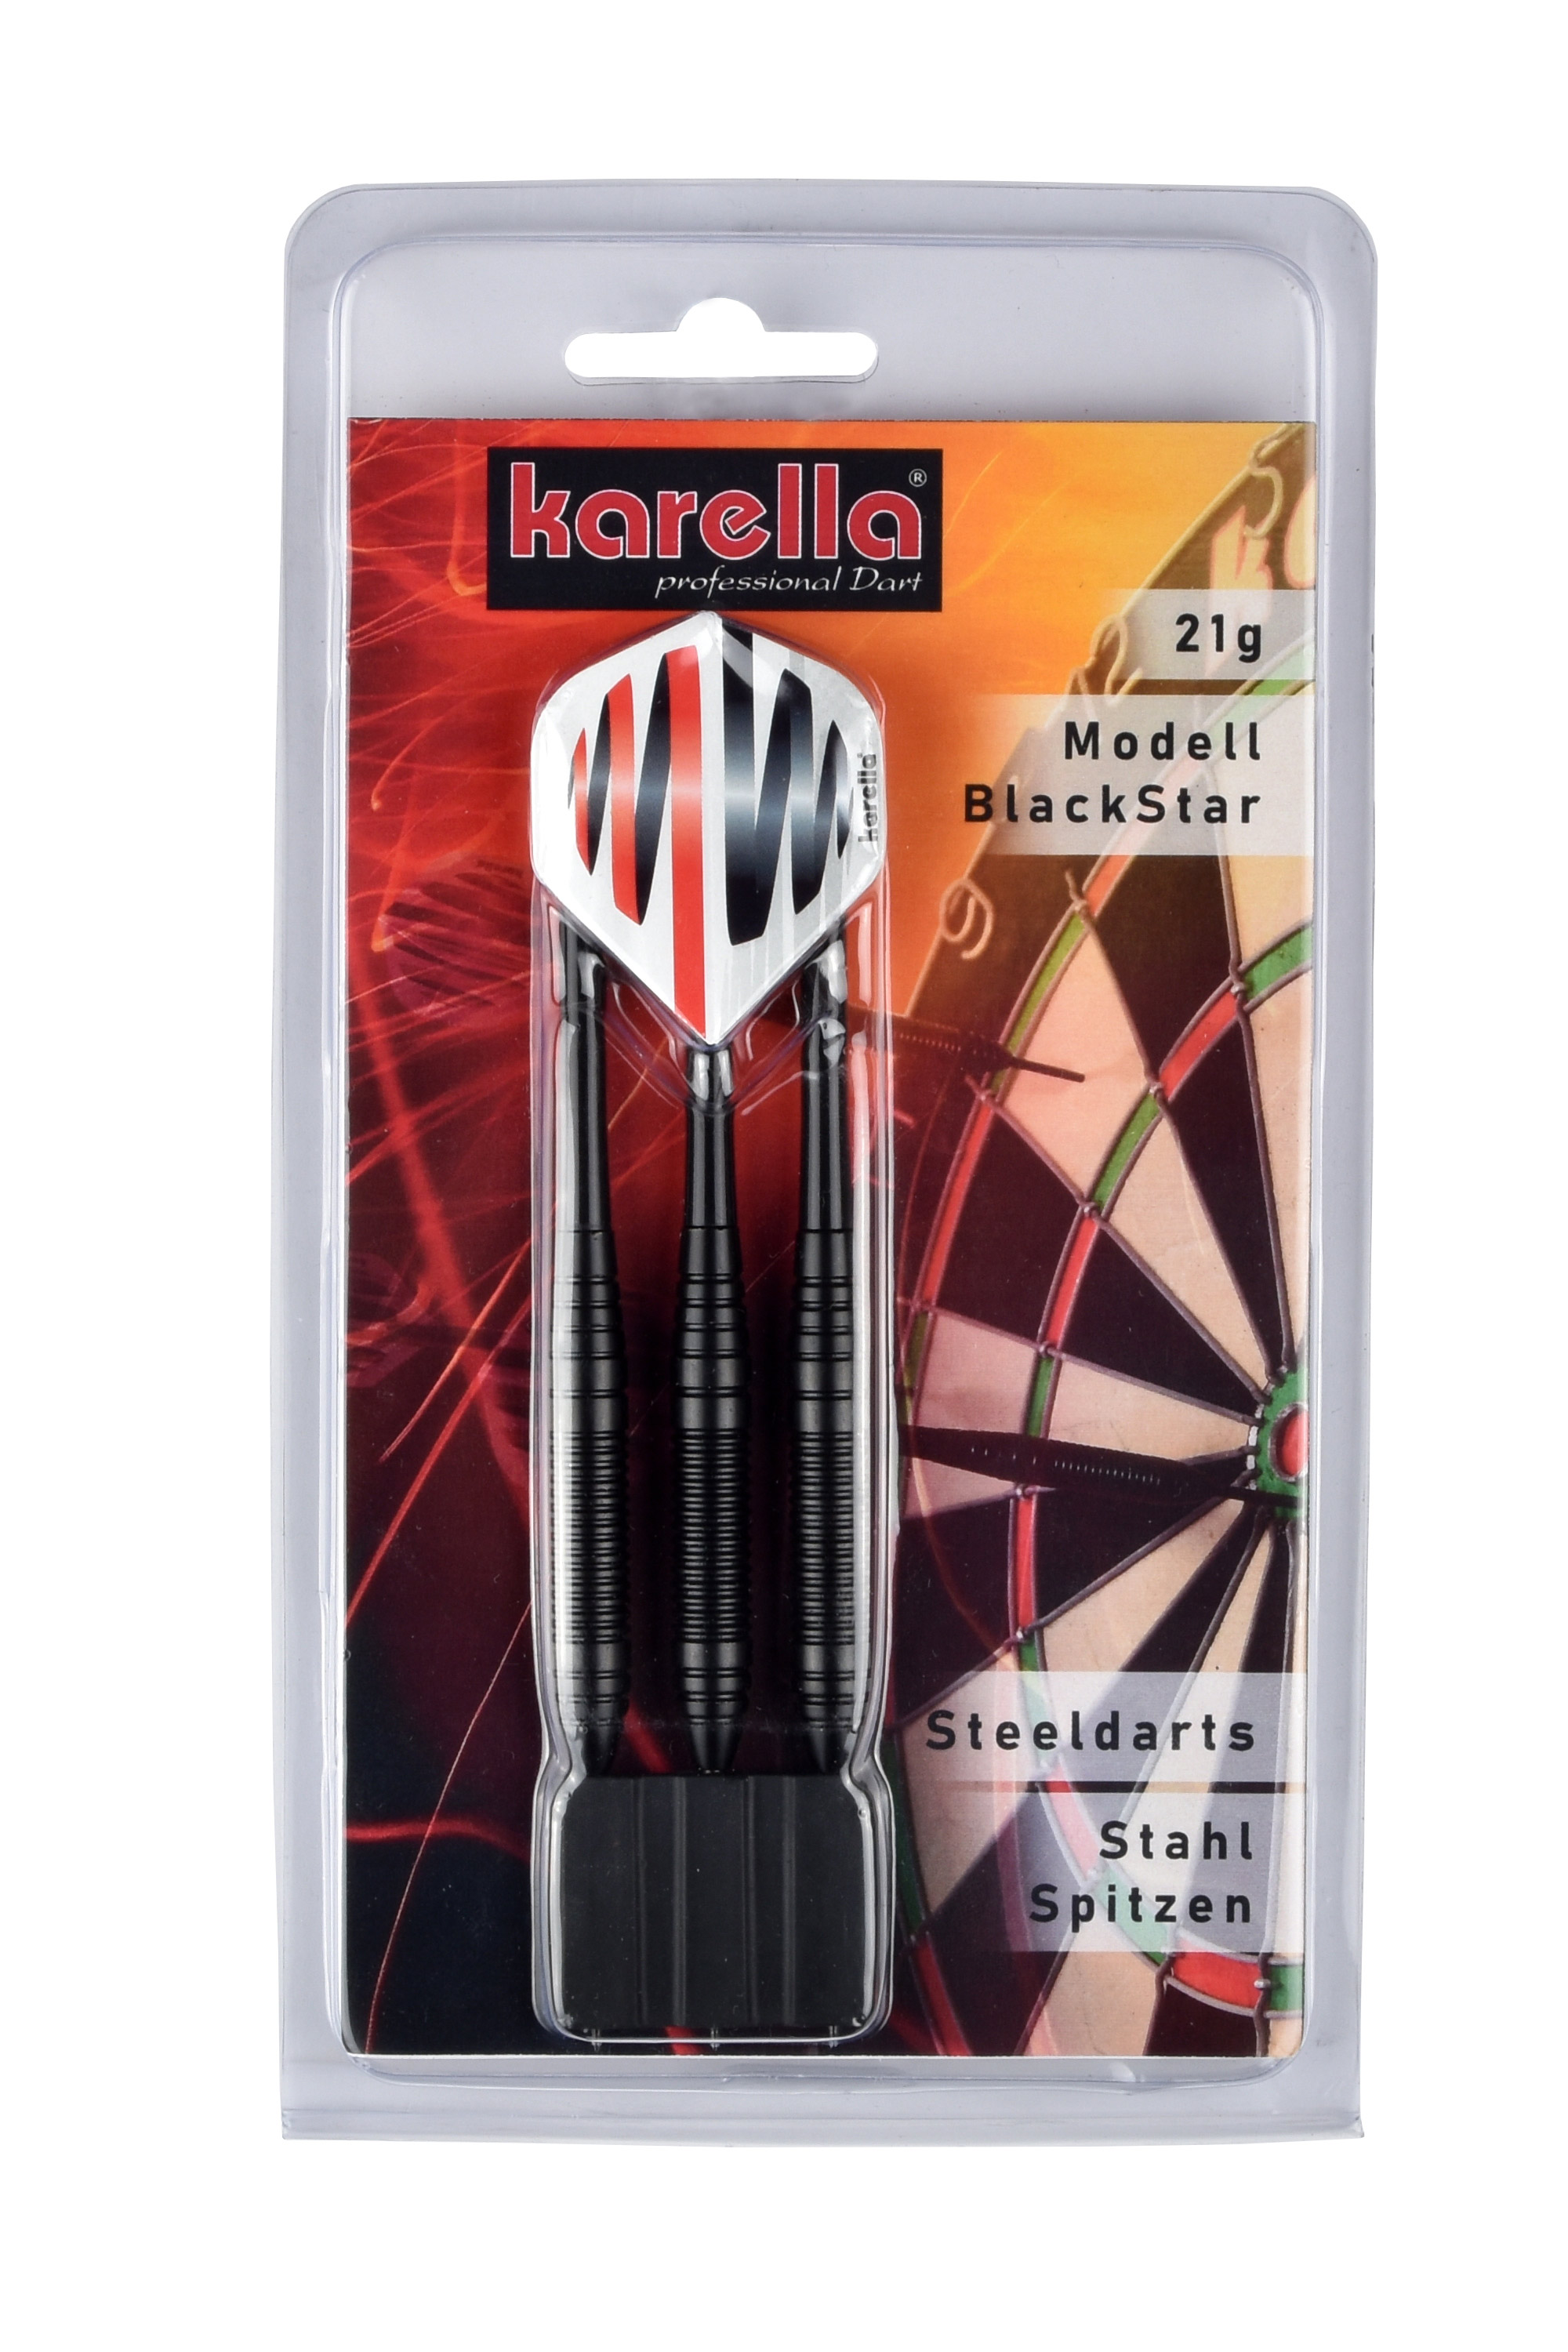 Dartboard Karella Master in set including 2 sets of Karella steel darts